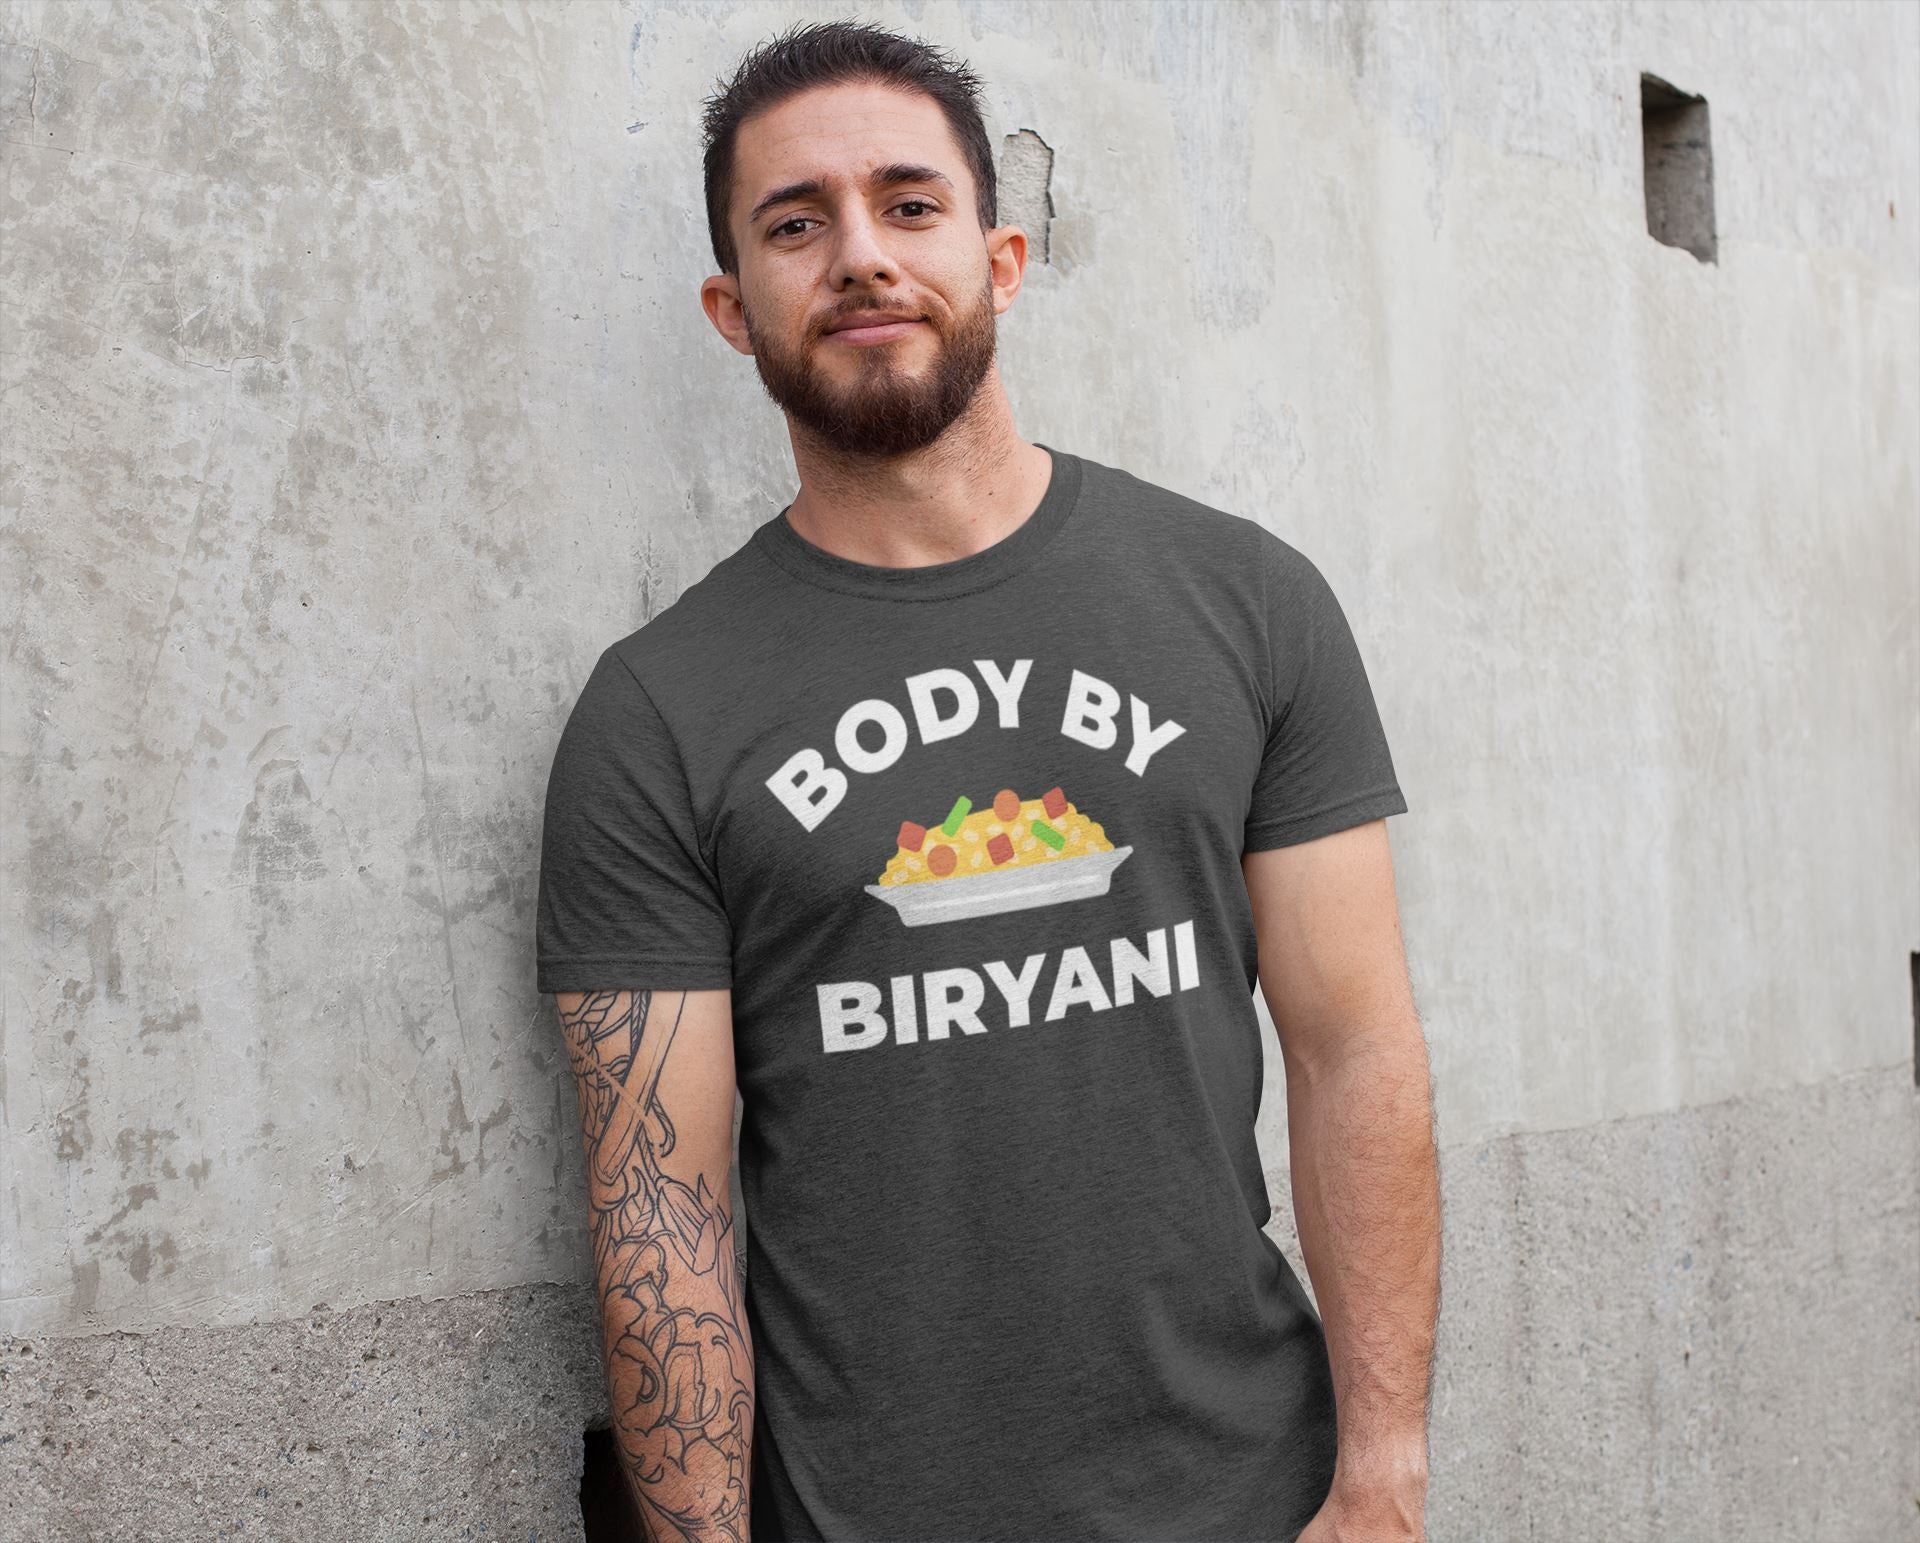 Body By Biryani Special Black T Shirt for Men and Women freeshipping - Catch My Drift India